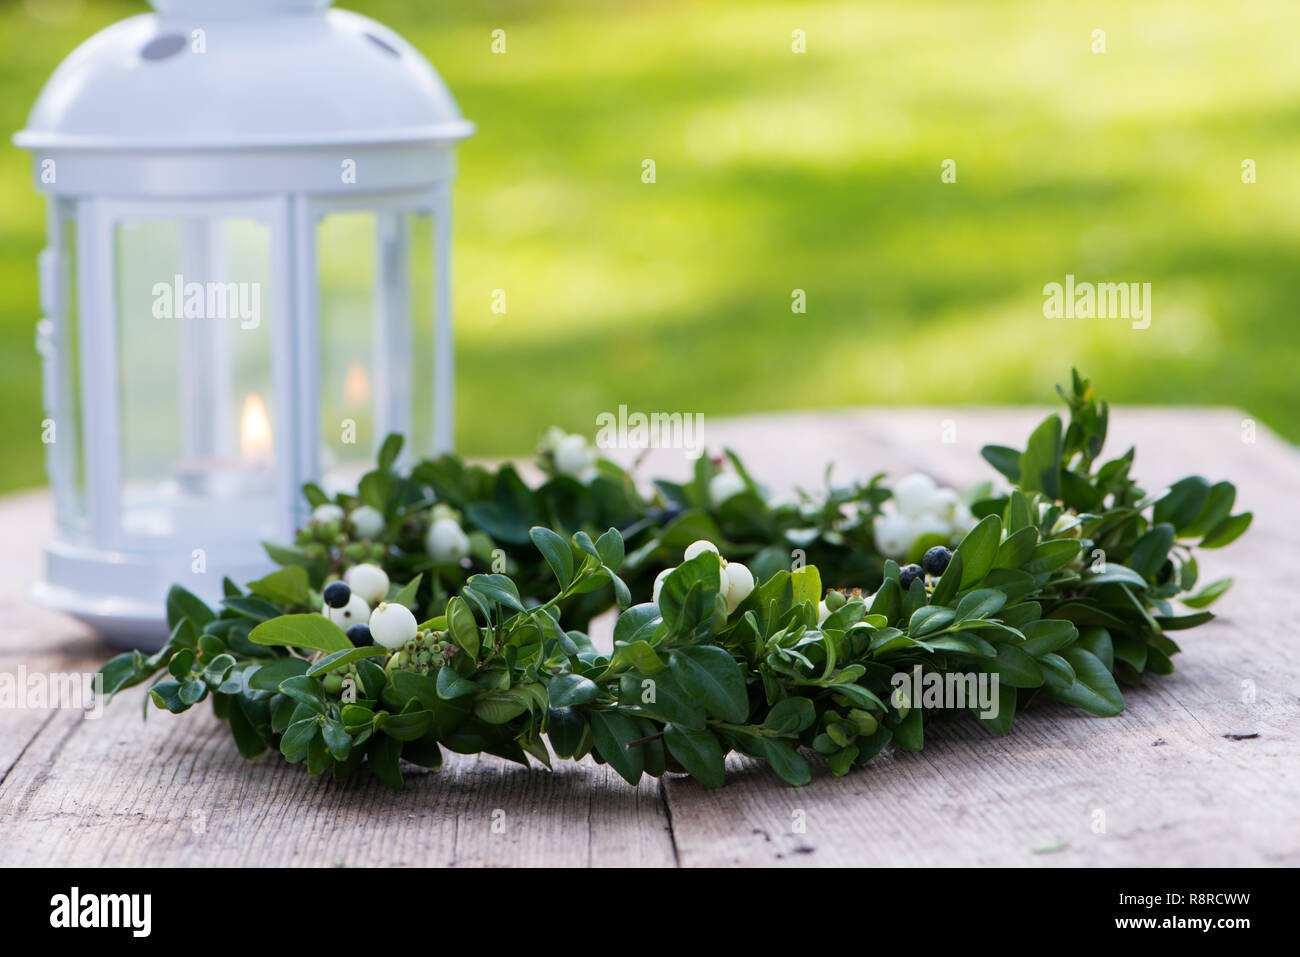 Little wreath on wooden background Stock Photo